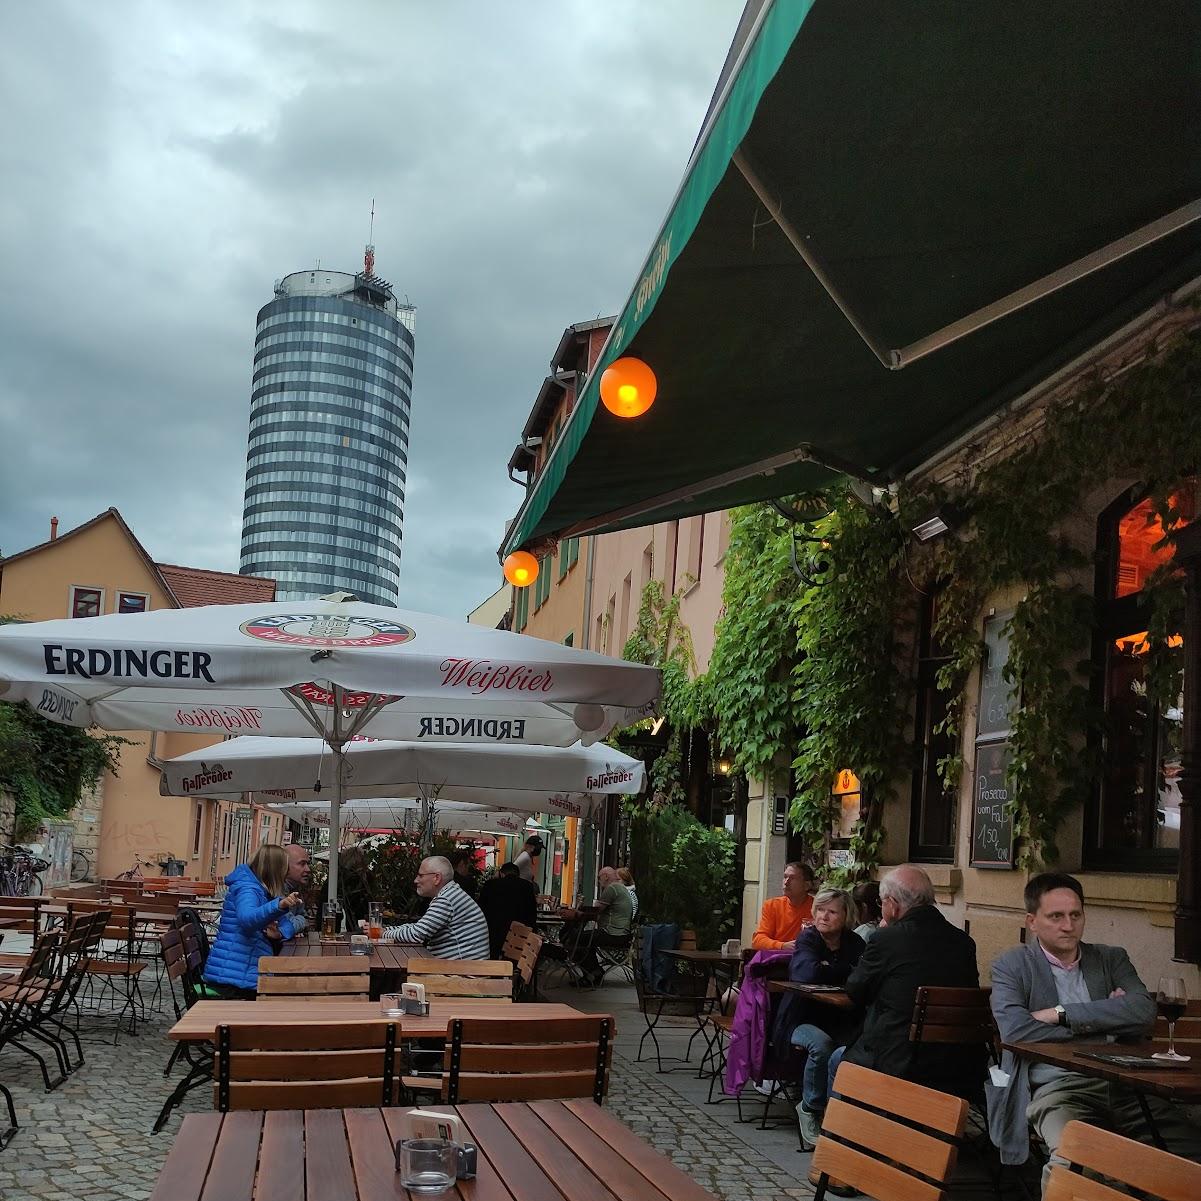 Restaurant "Die Kneipe" in Jena